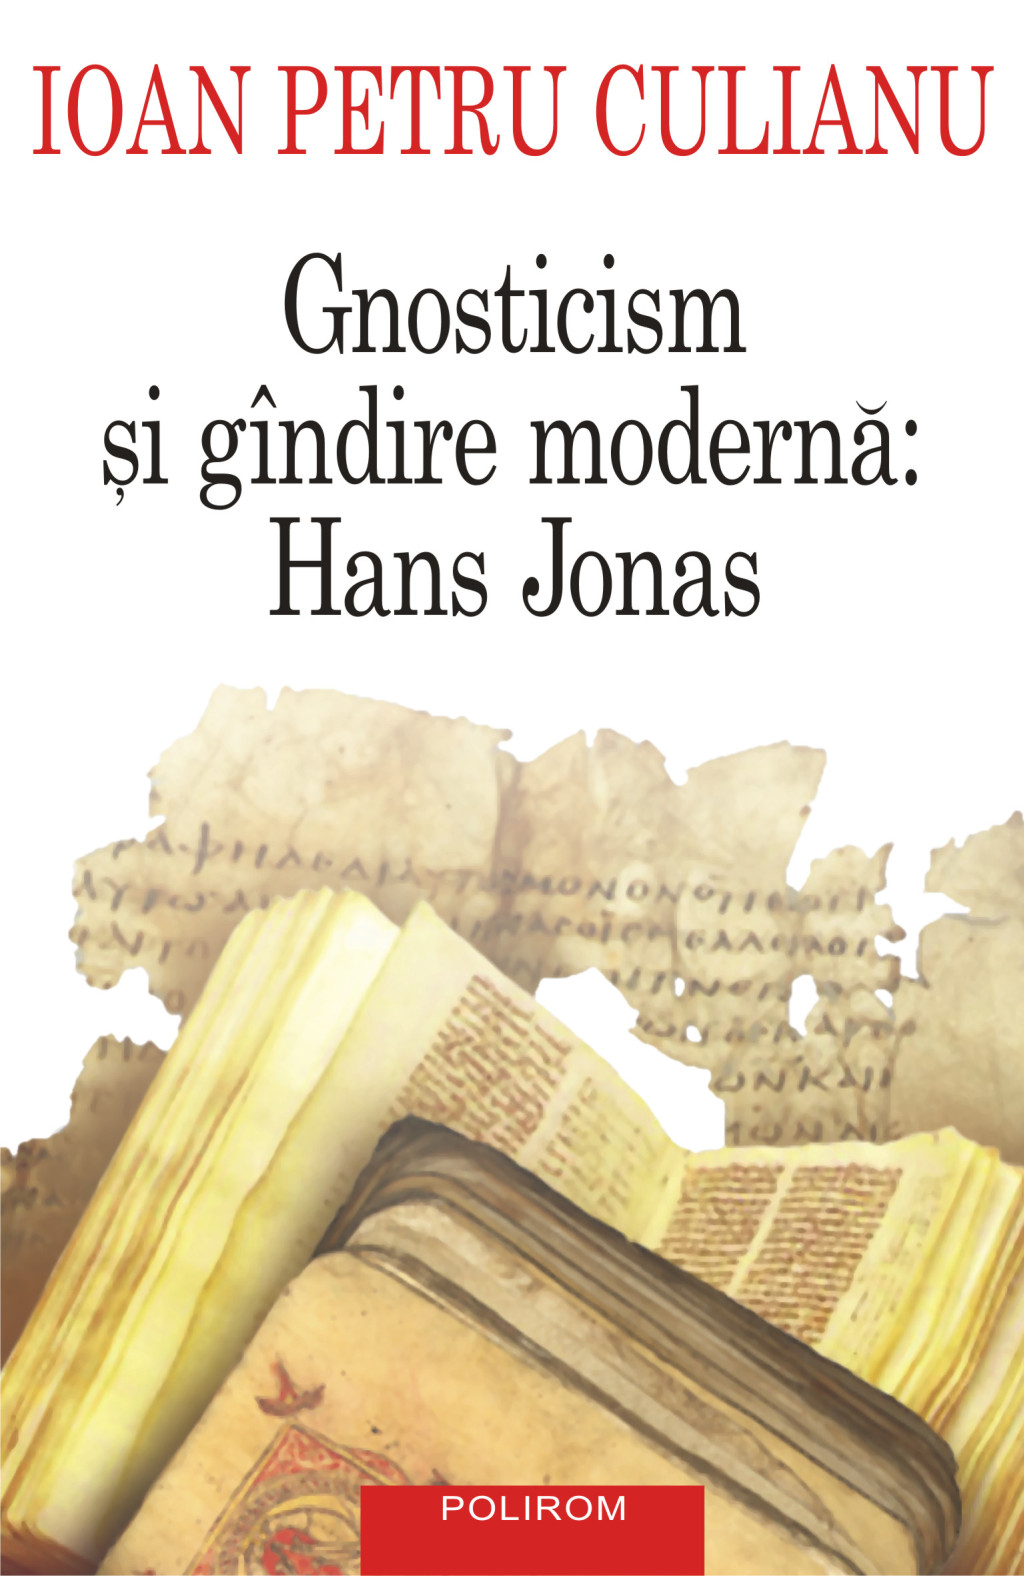 eBook Gnosticism si gindire moderna Hans Jonas - Ioan Petru Culianu